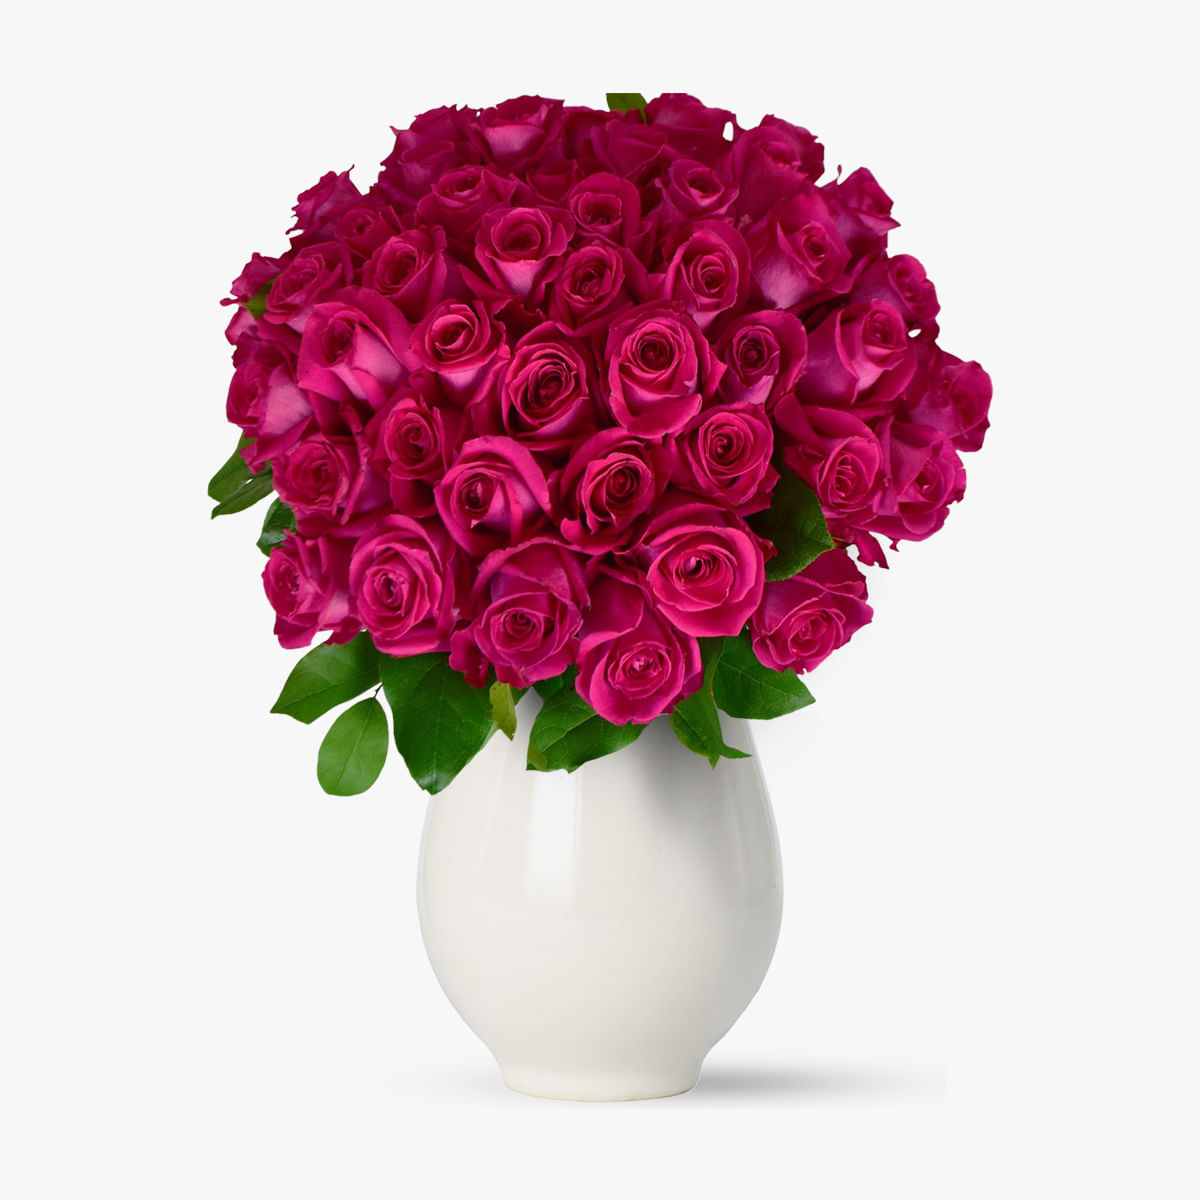 Buchet de 55 trandafiri roz – Standard Buchet imagine 2022